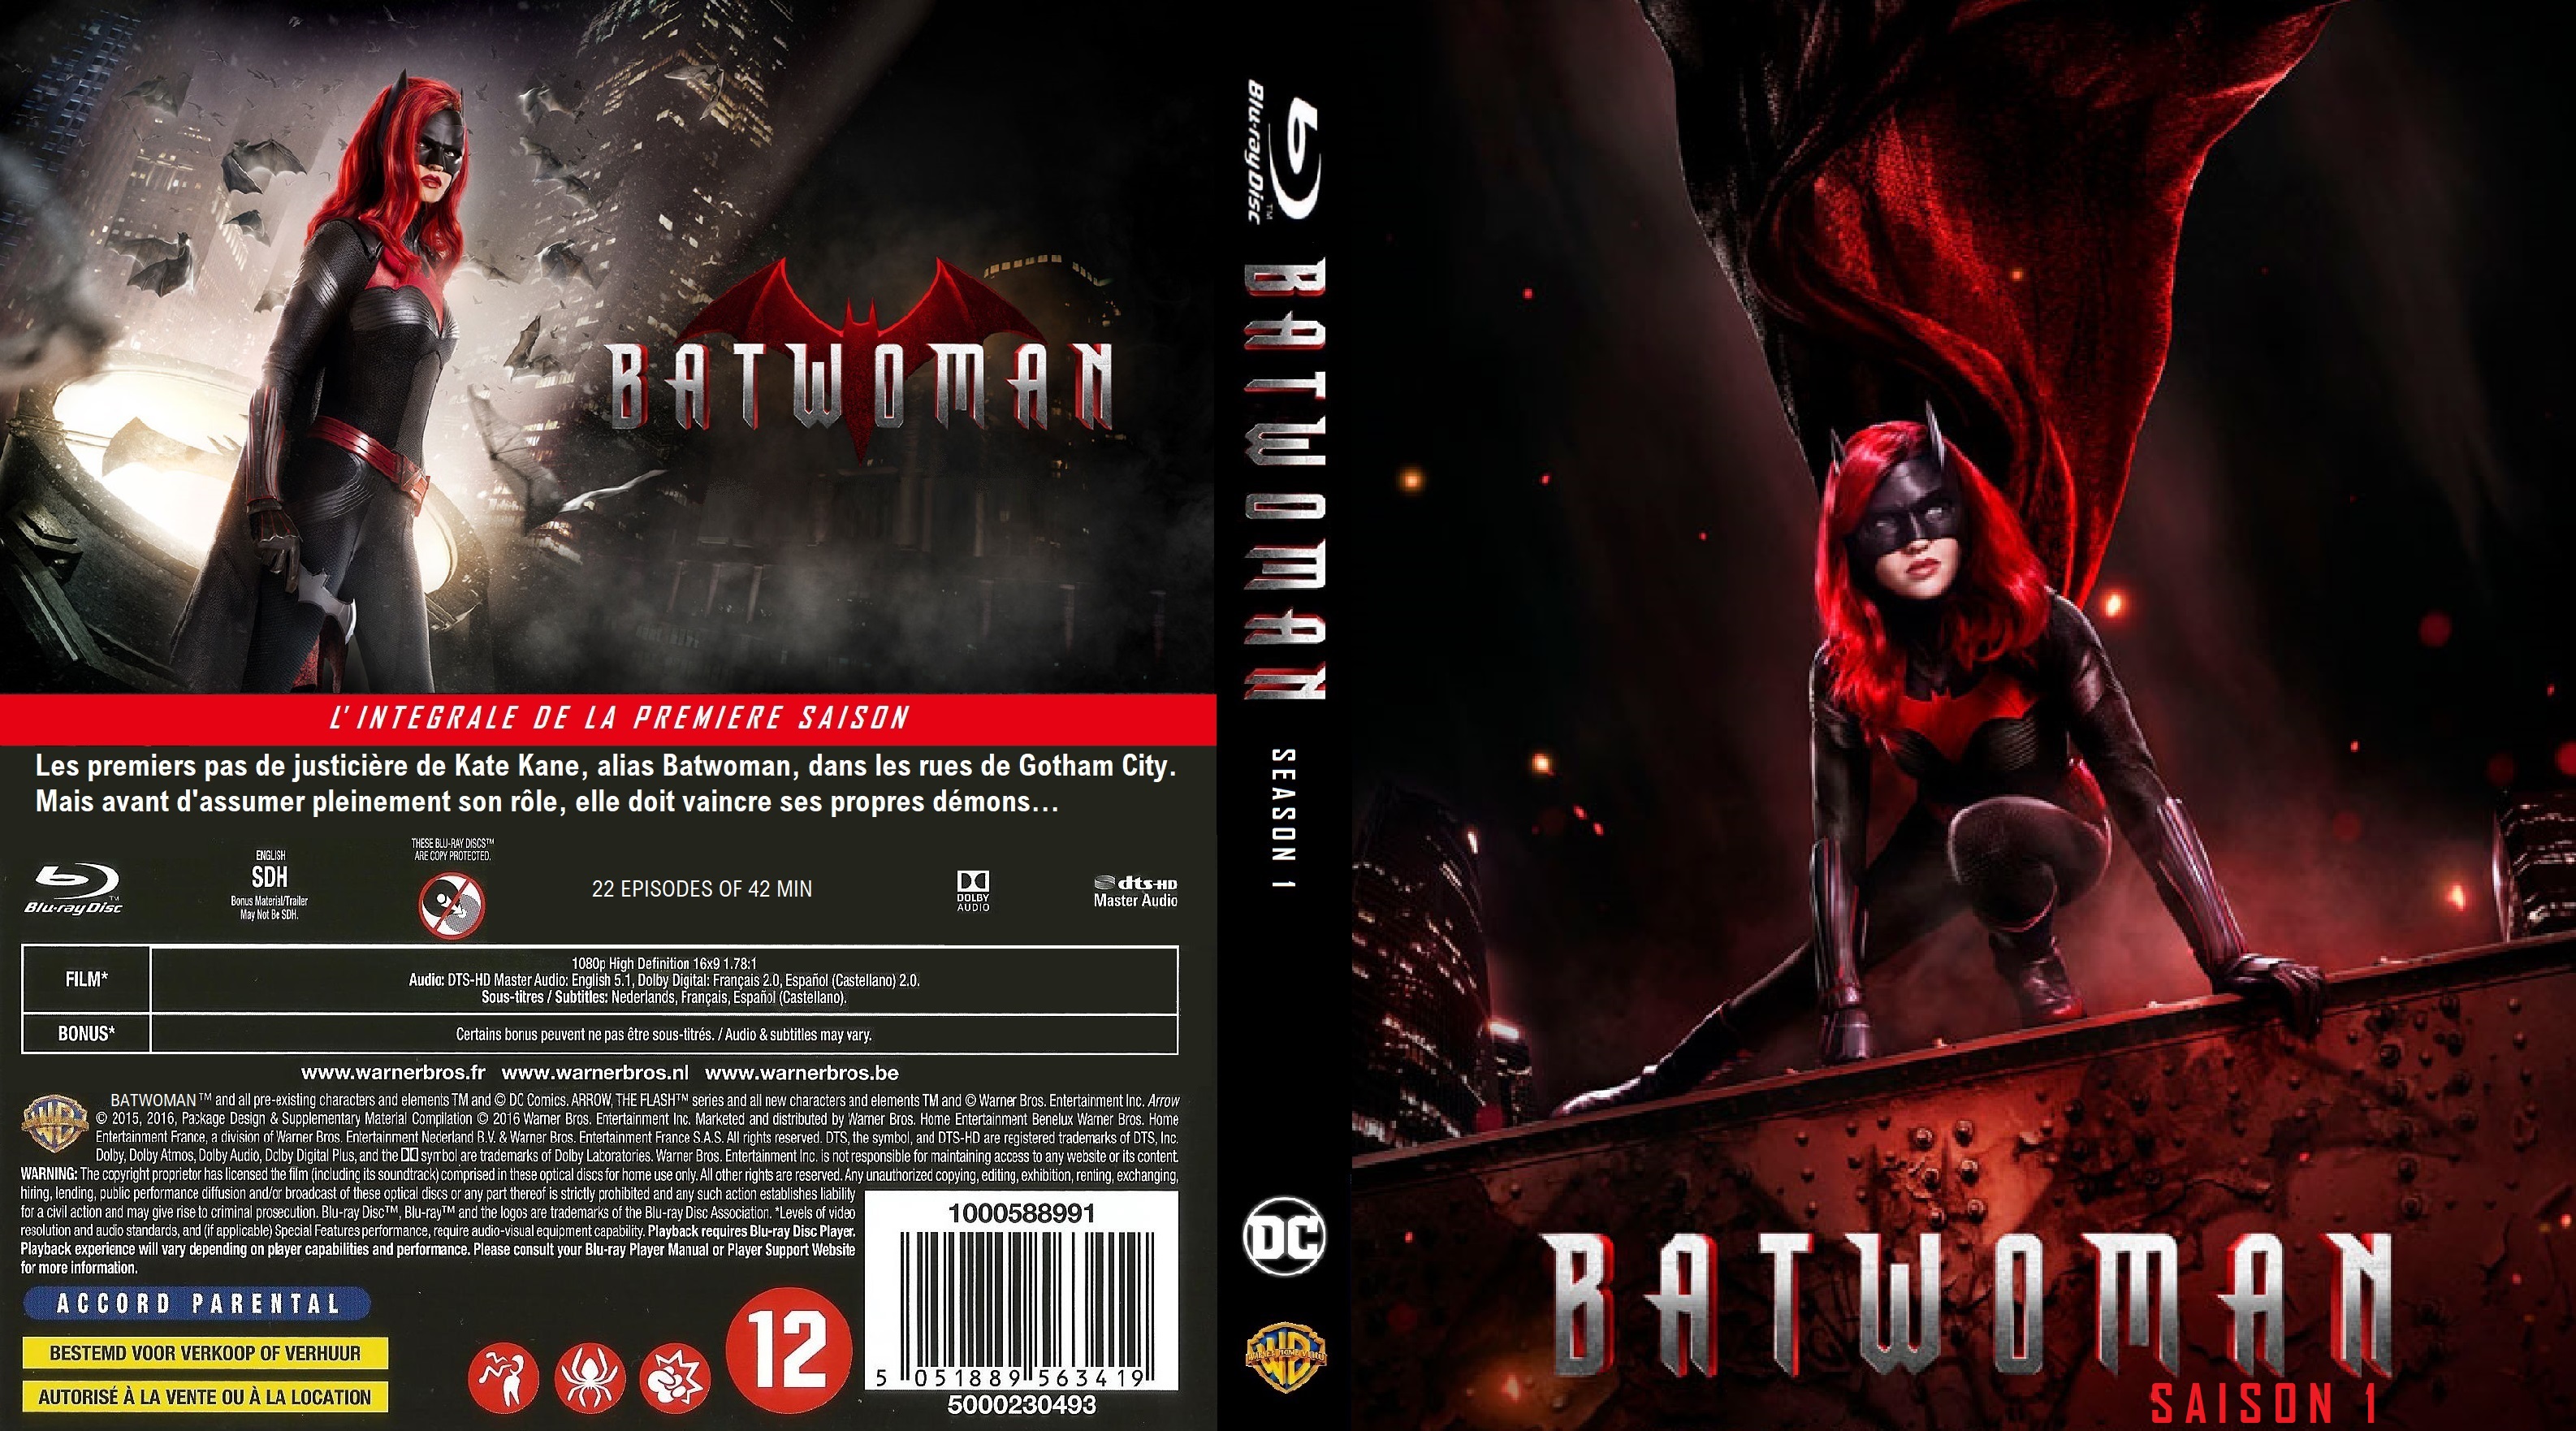 Jaquette DVD Batwoman Saison 1 Blu-ray custom